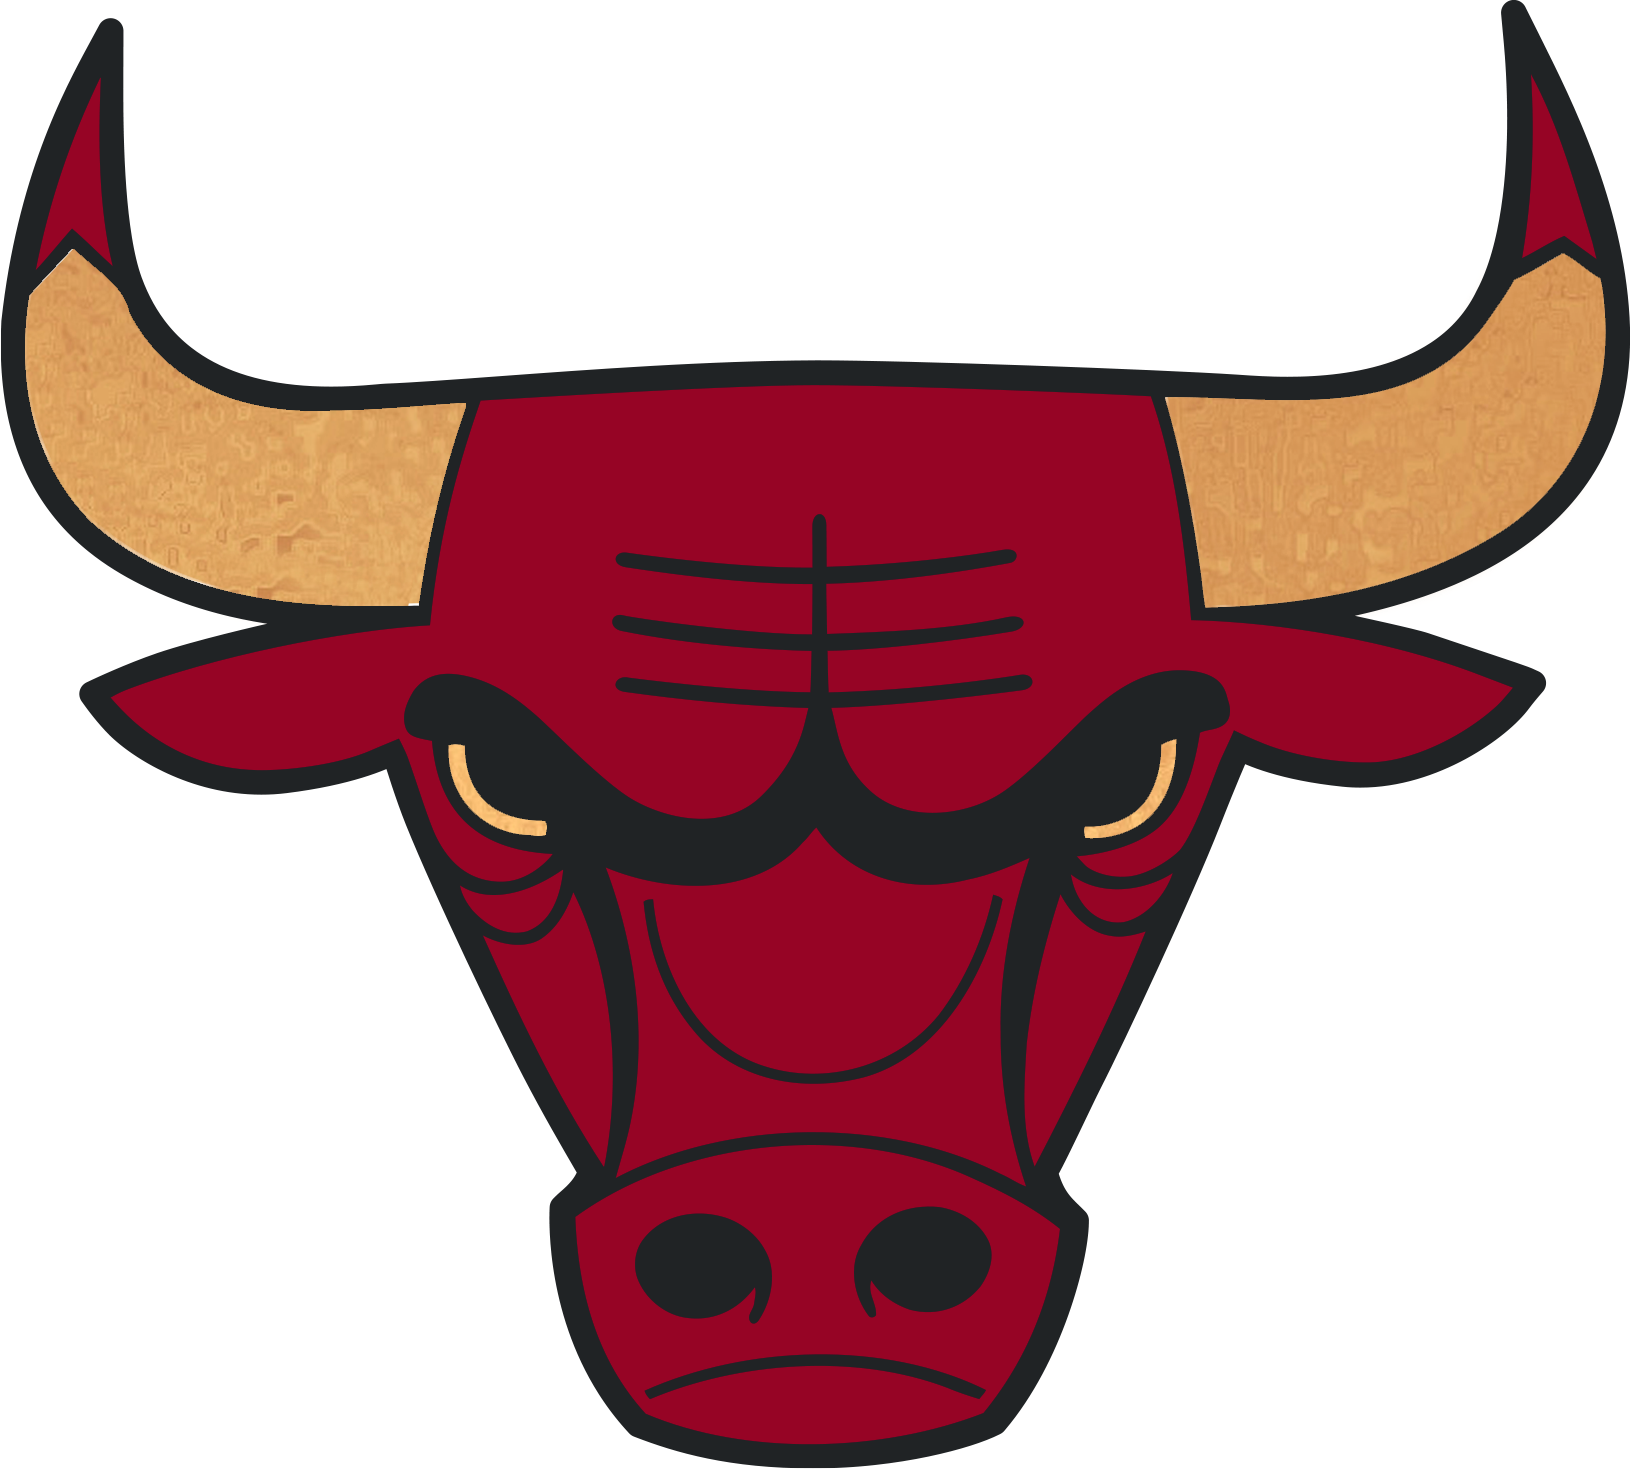 Doudoune Chicago Bulls